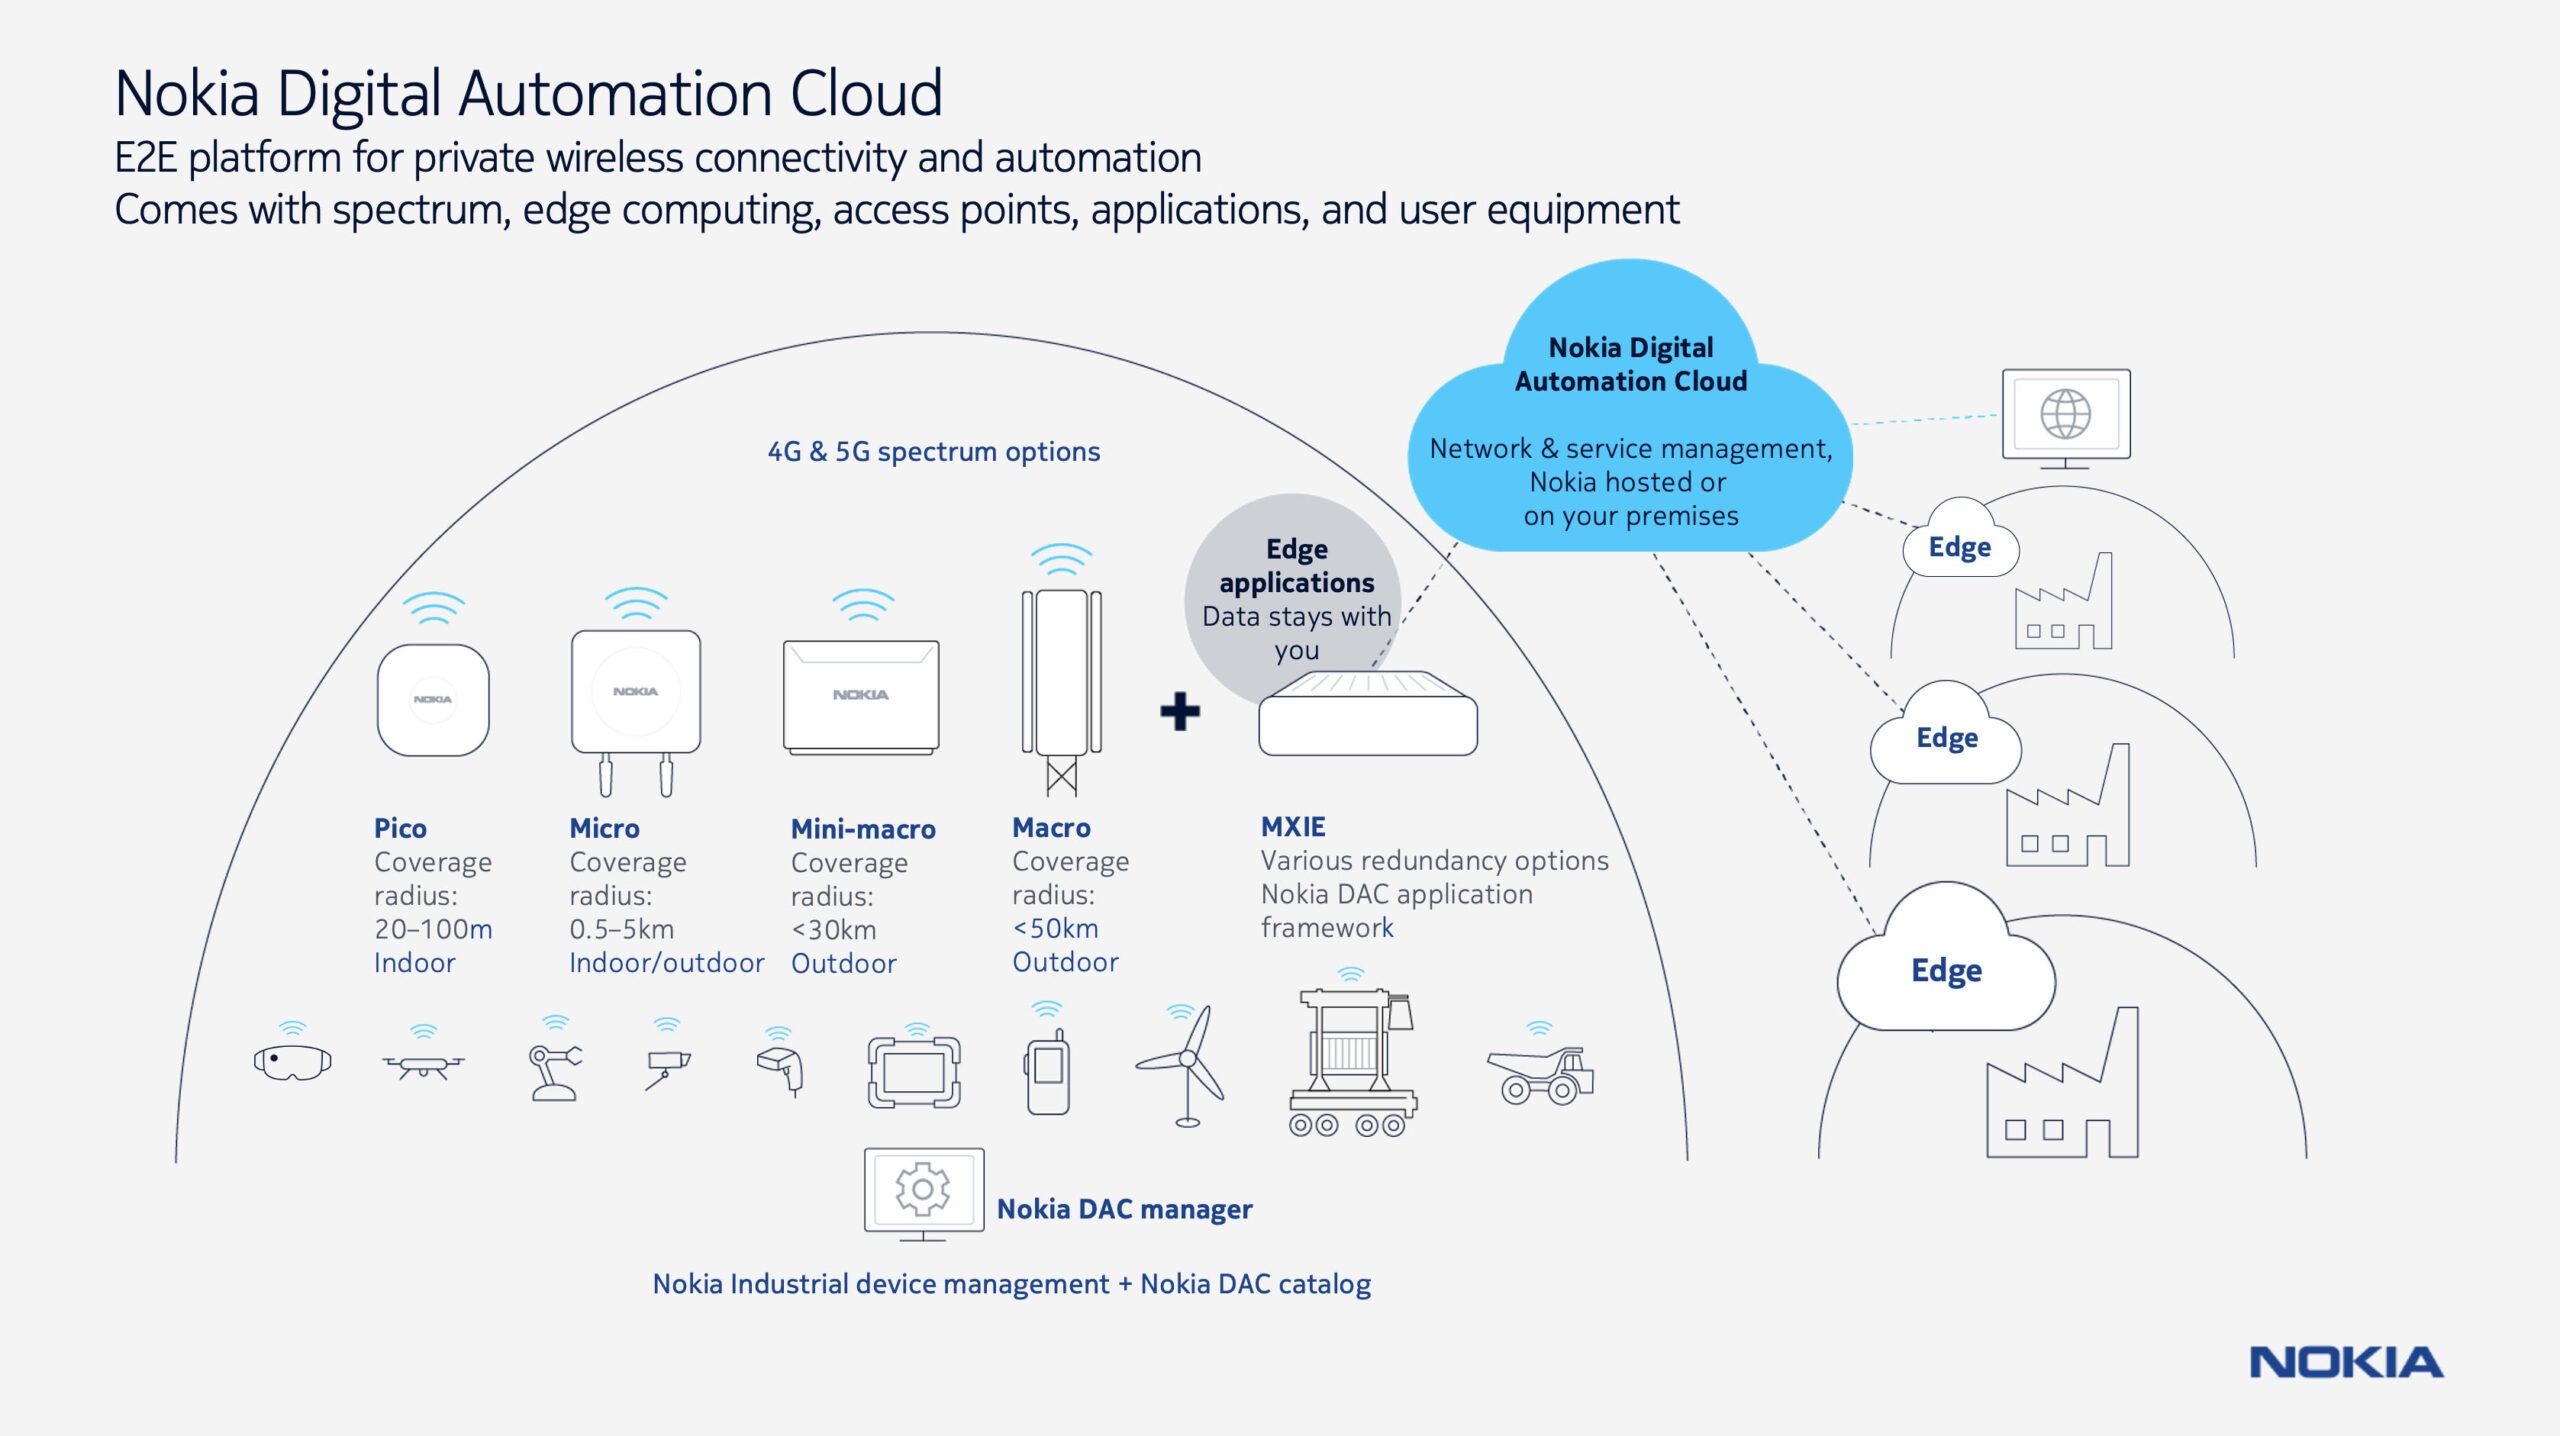 Nokia Digital Automation Cloud (DAC)